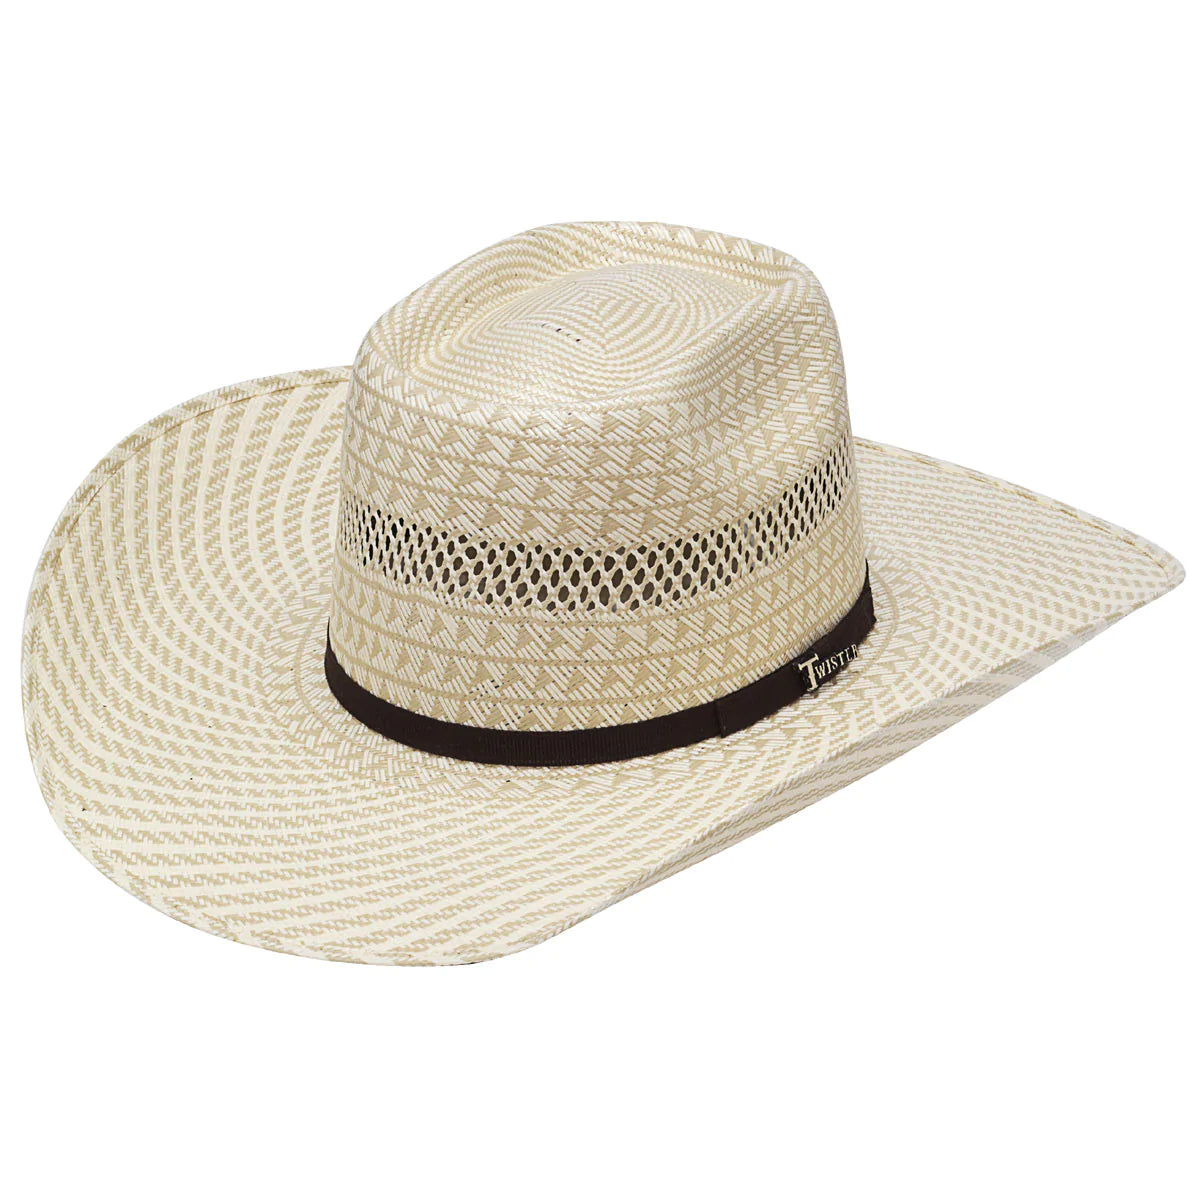 Twister 20X Brick Top Shantung Straw Hat